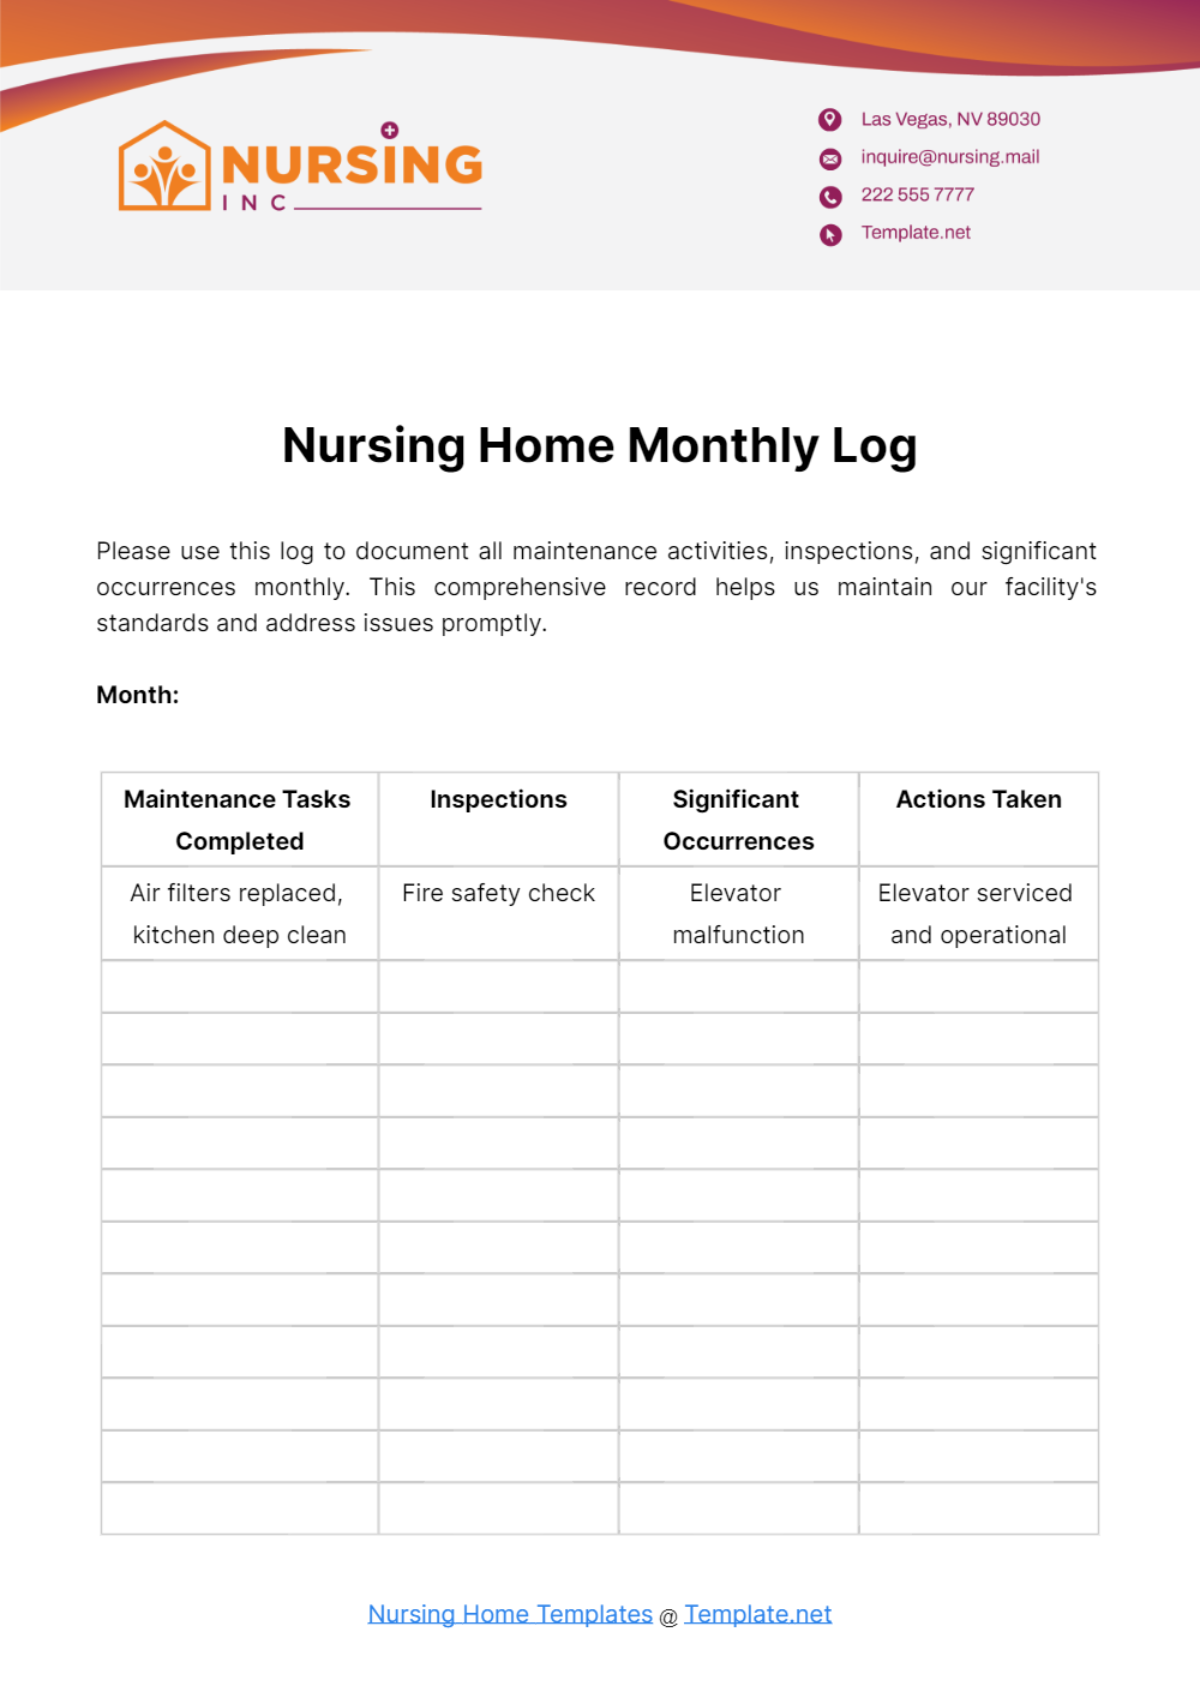 Nursing Home Monthly Log Template